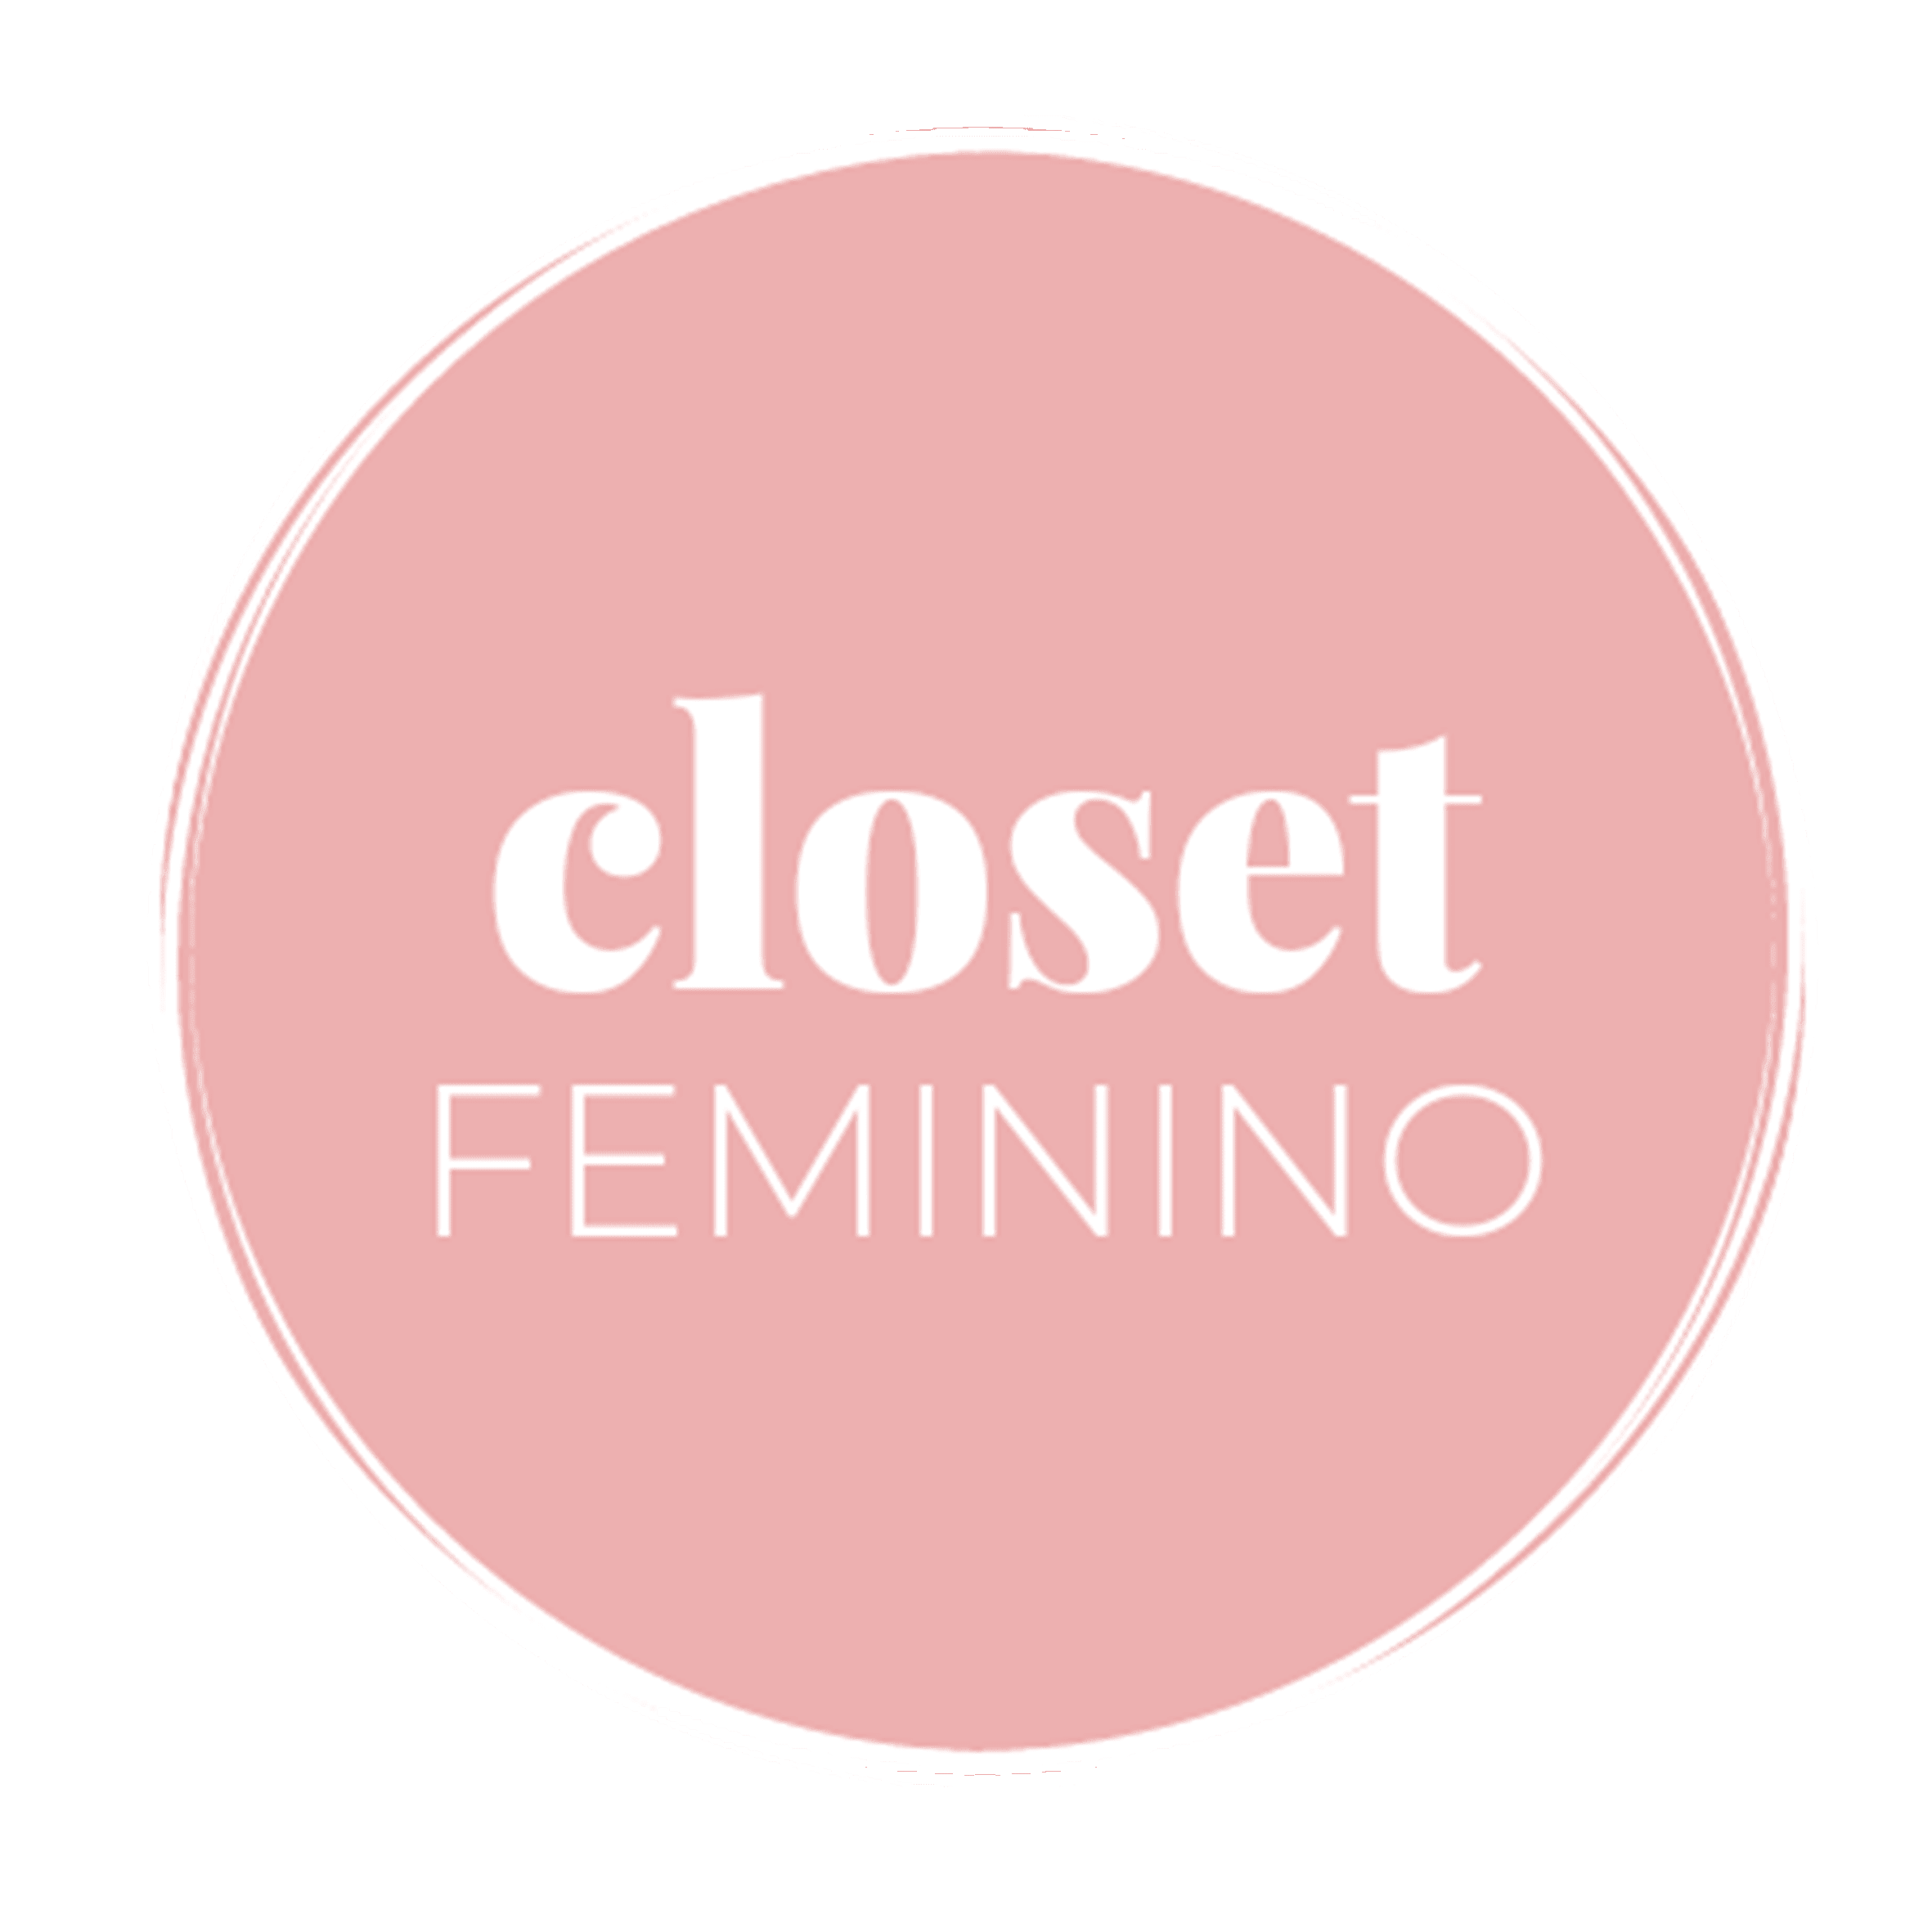 Closet Feminino by Jose